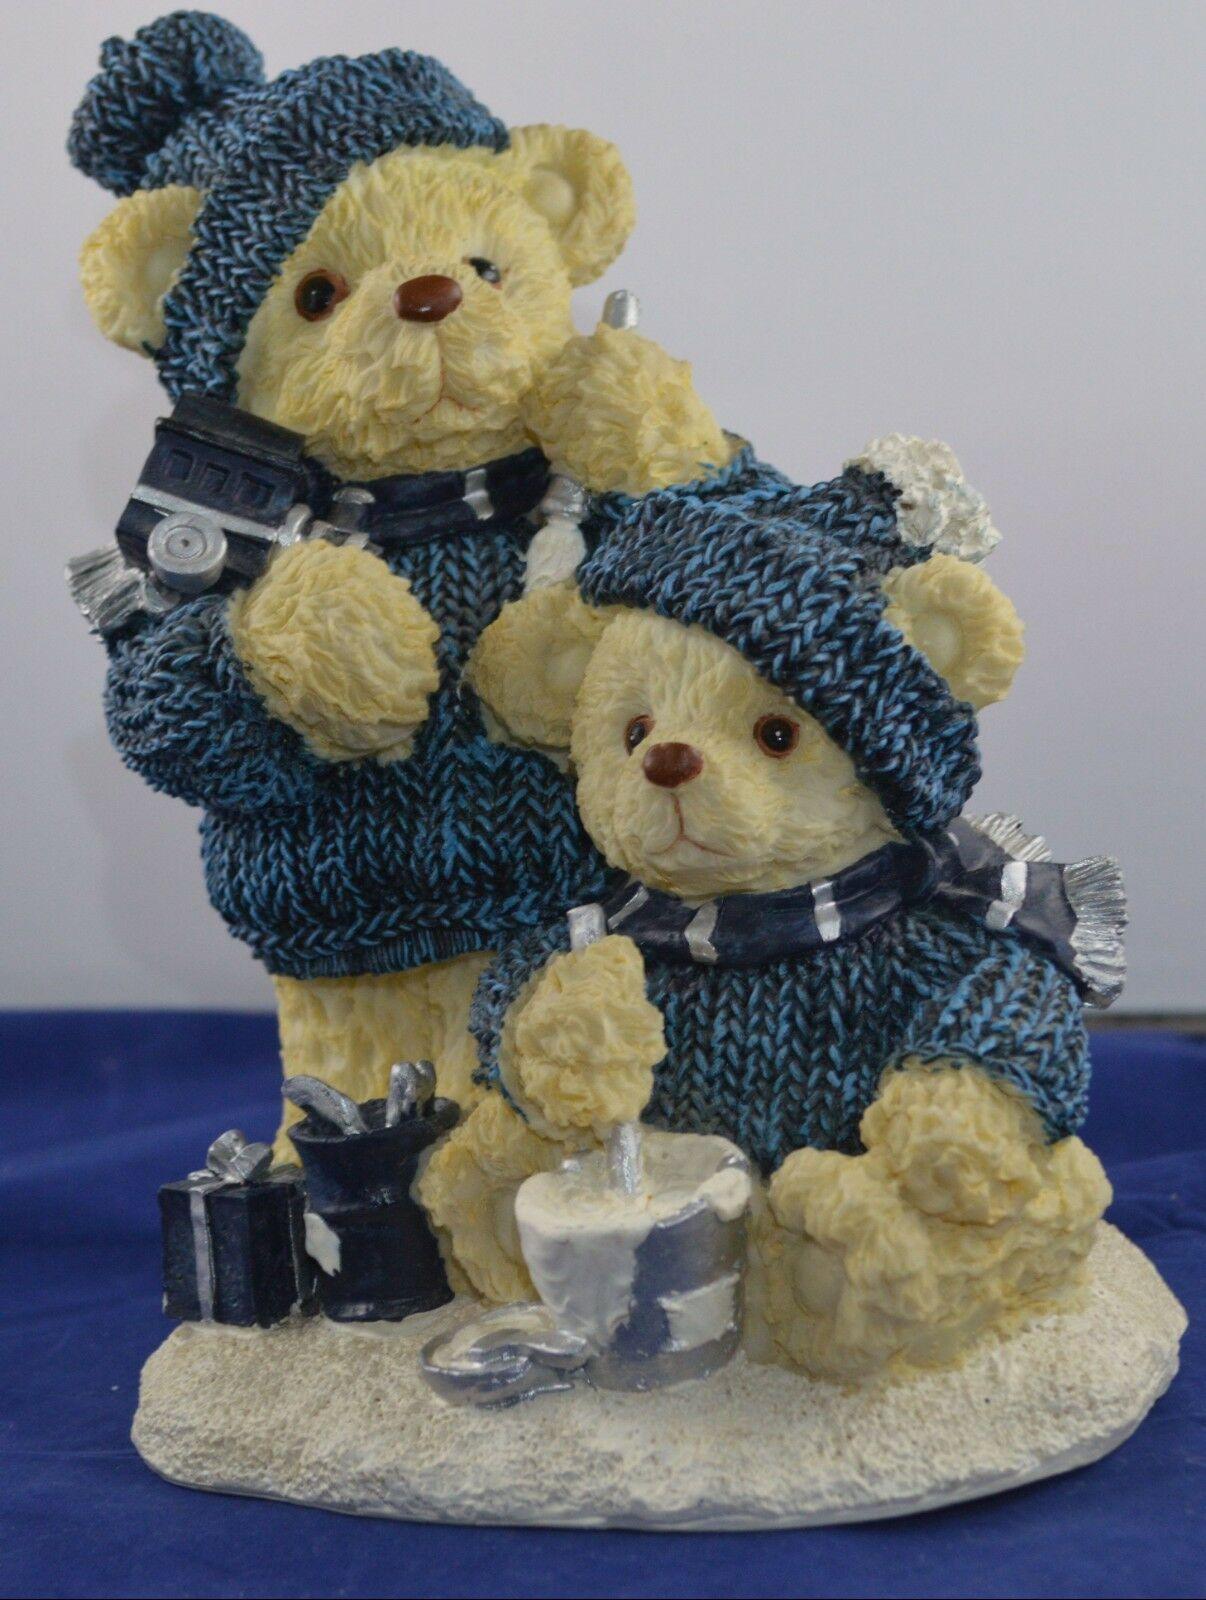 BEARS THREE TEDDY BEAR ORNAMENTS - TMD167207